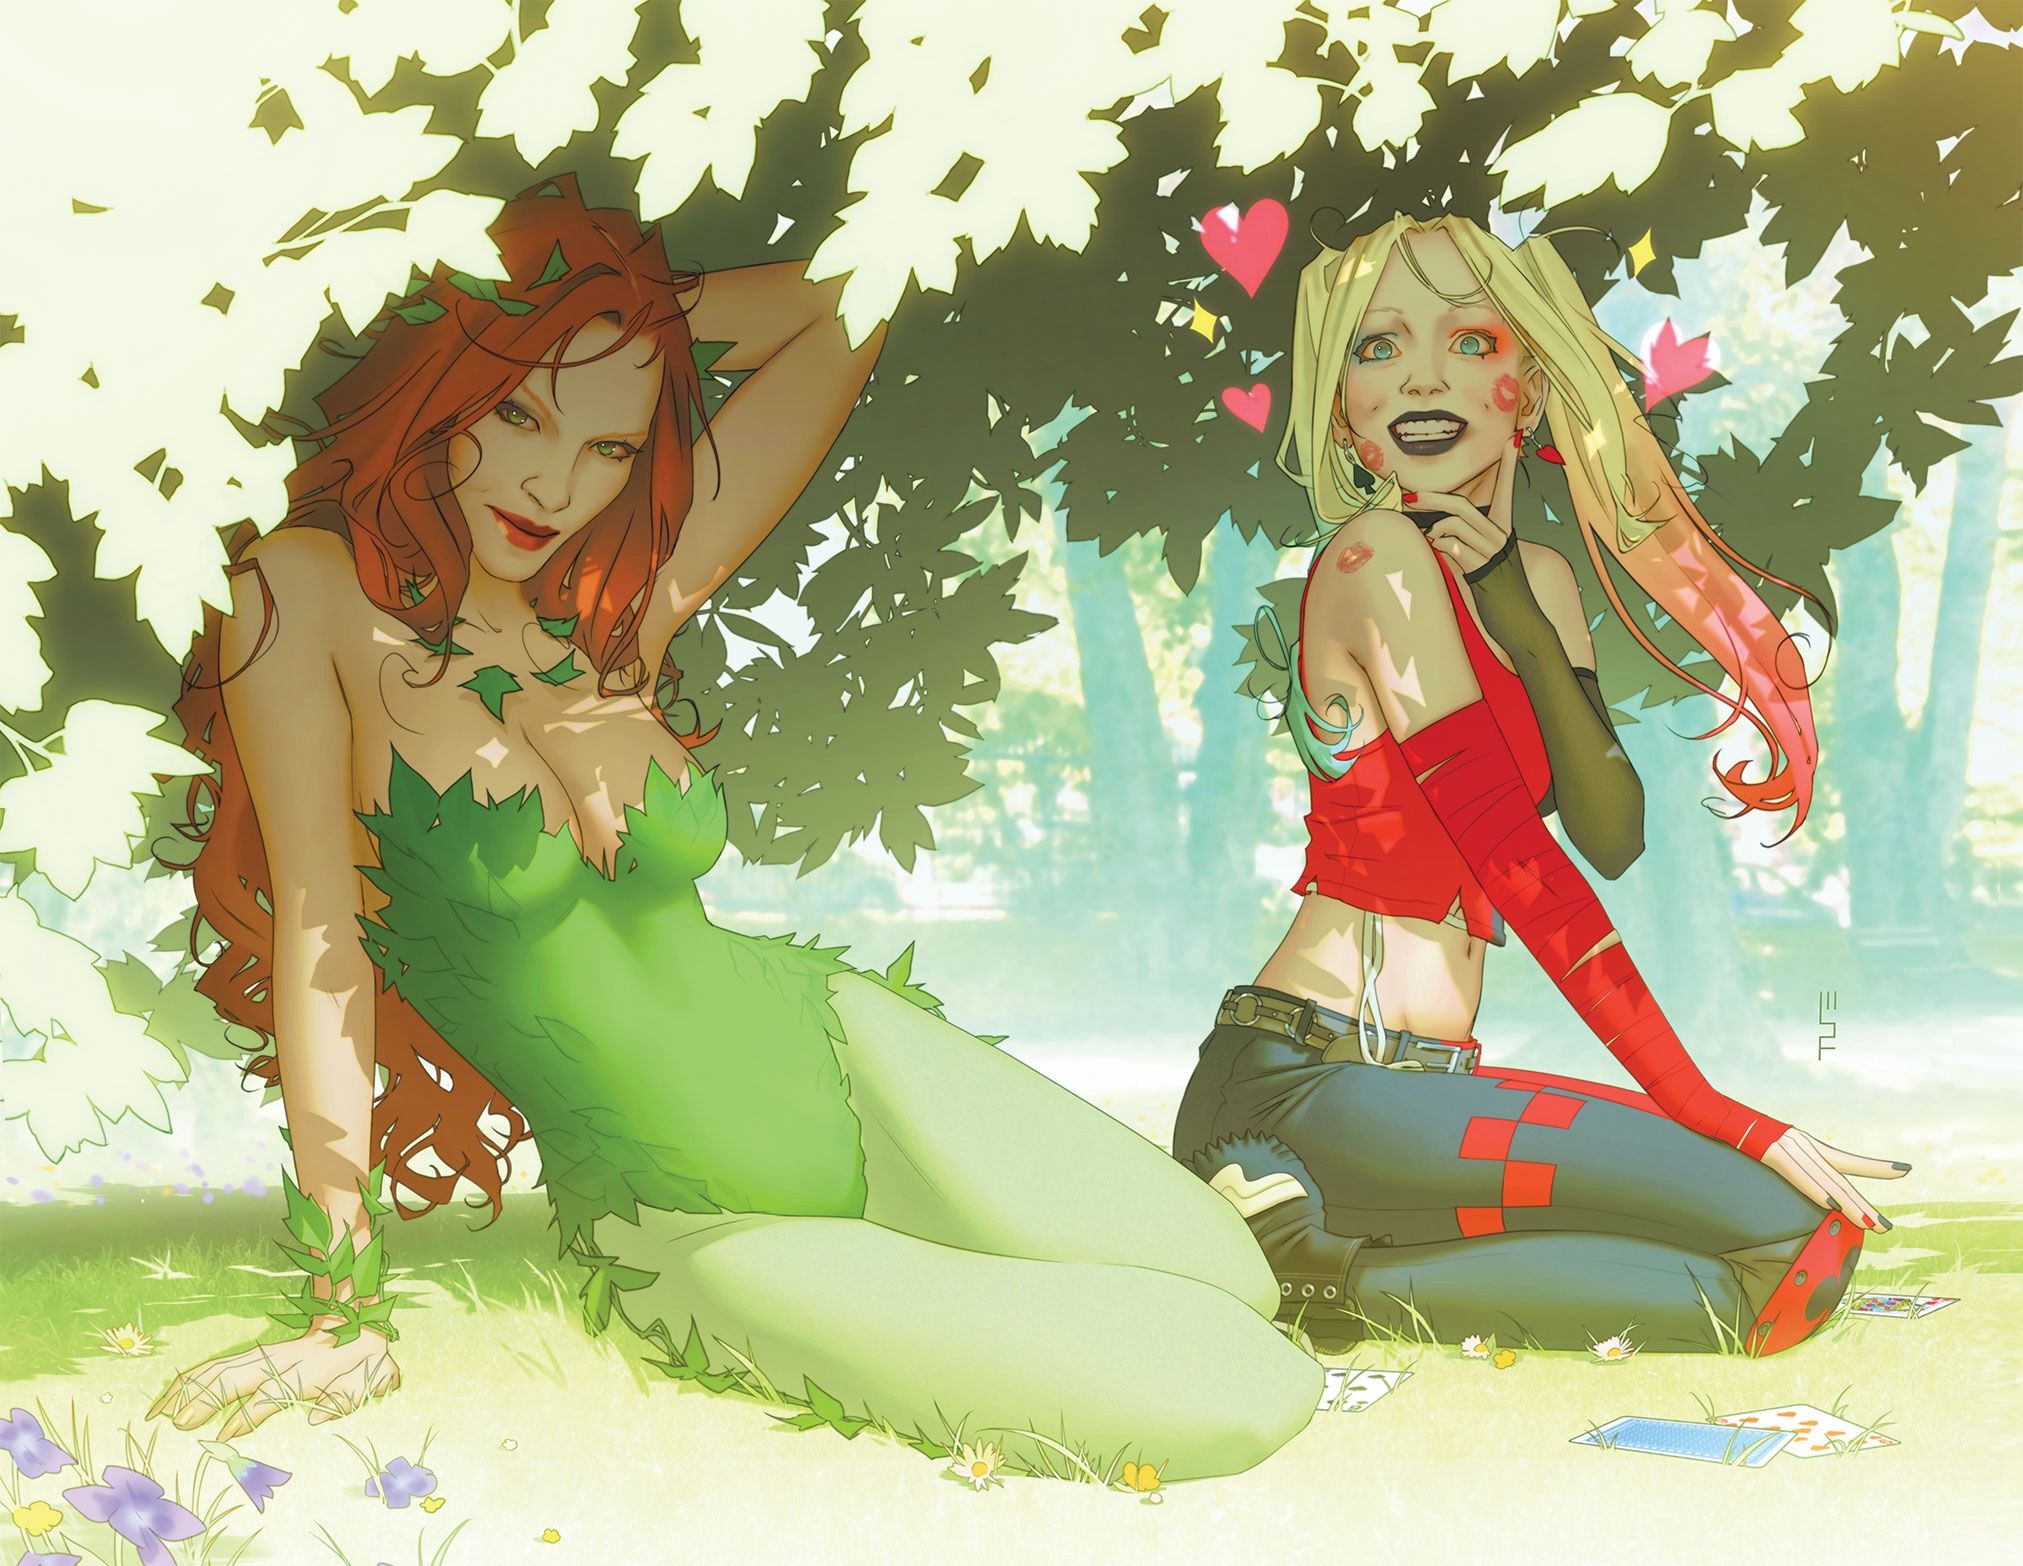 Poison Ivy 23 Harley Quinn 41 Pride Variant Cover: Poison Ivy and Harley Quinn sit side by side.